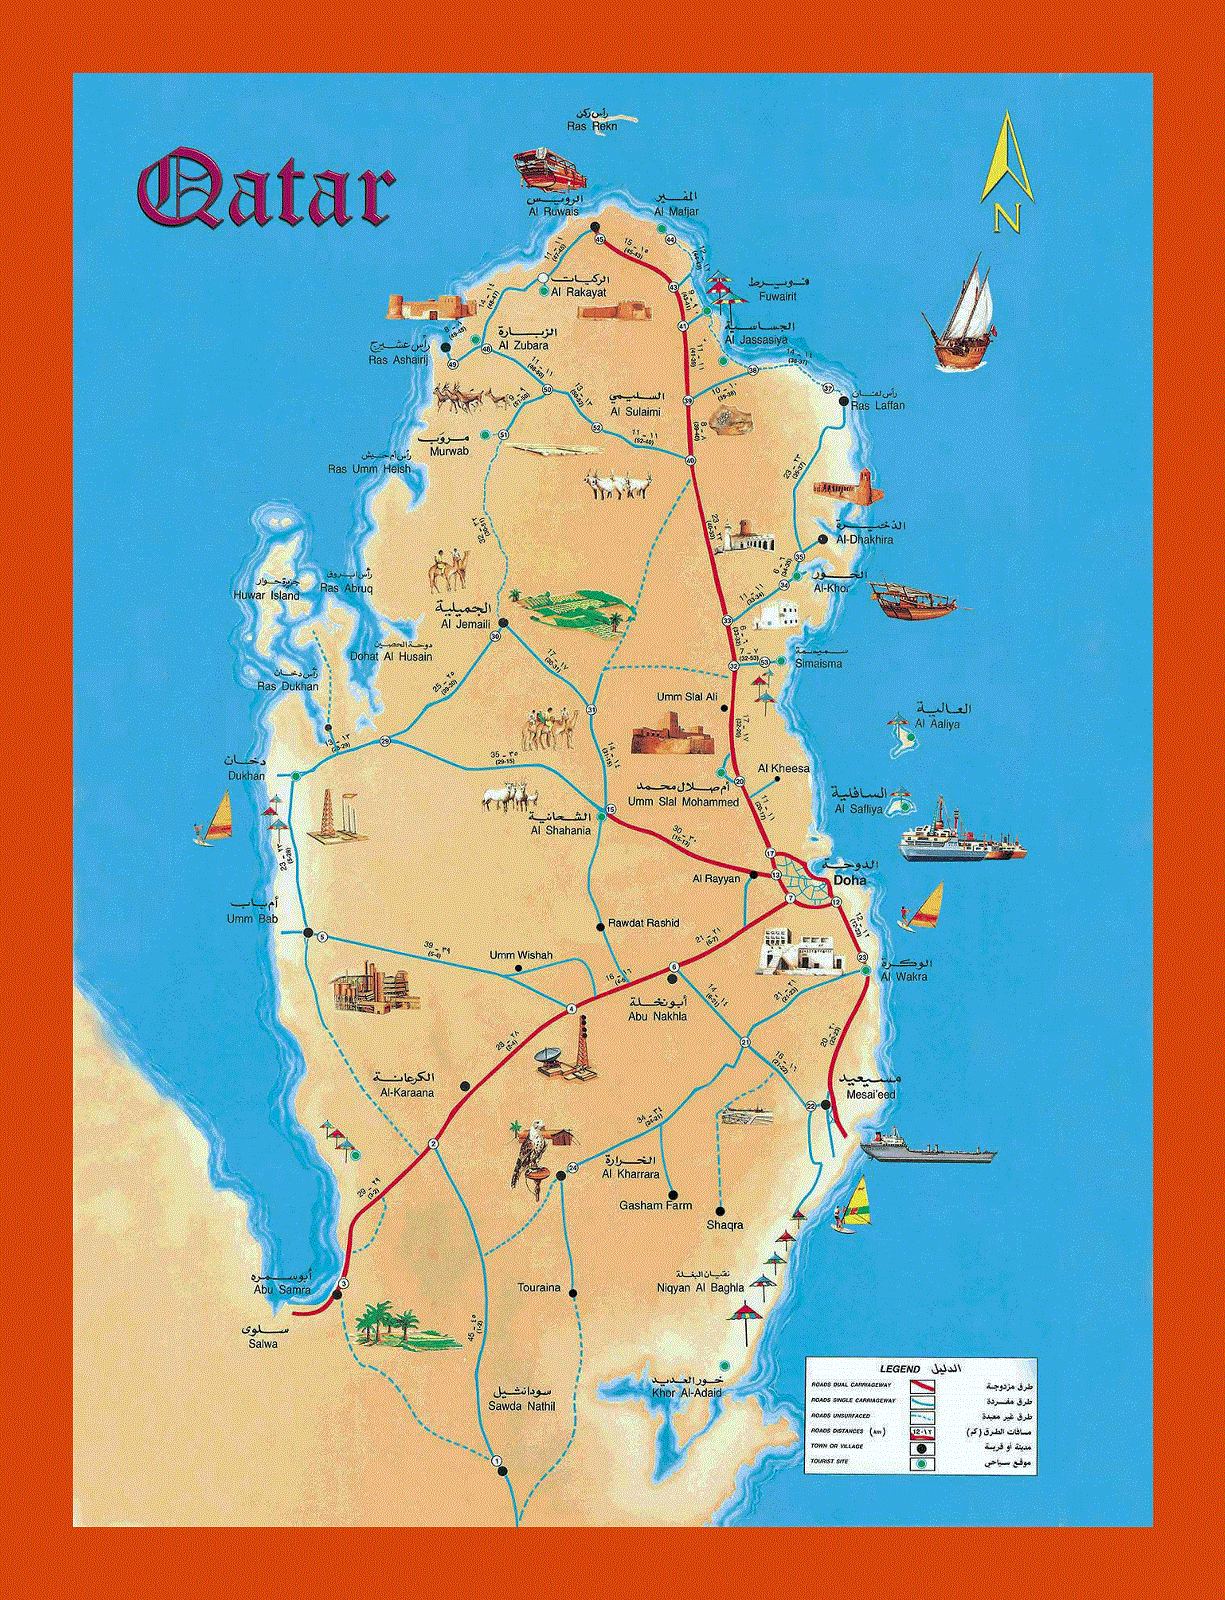 Tourist map of Qatar